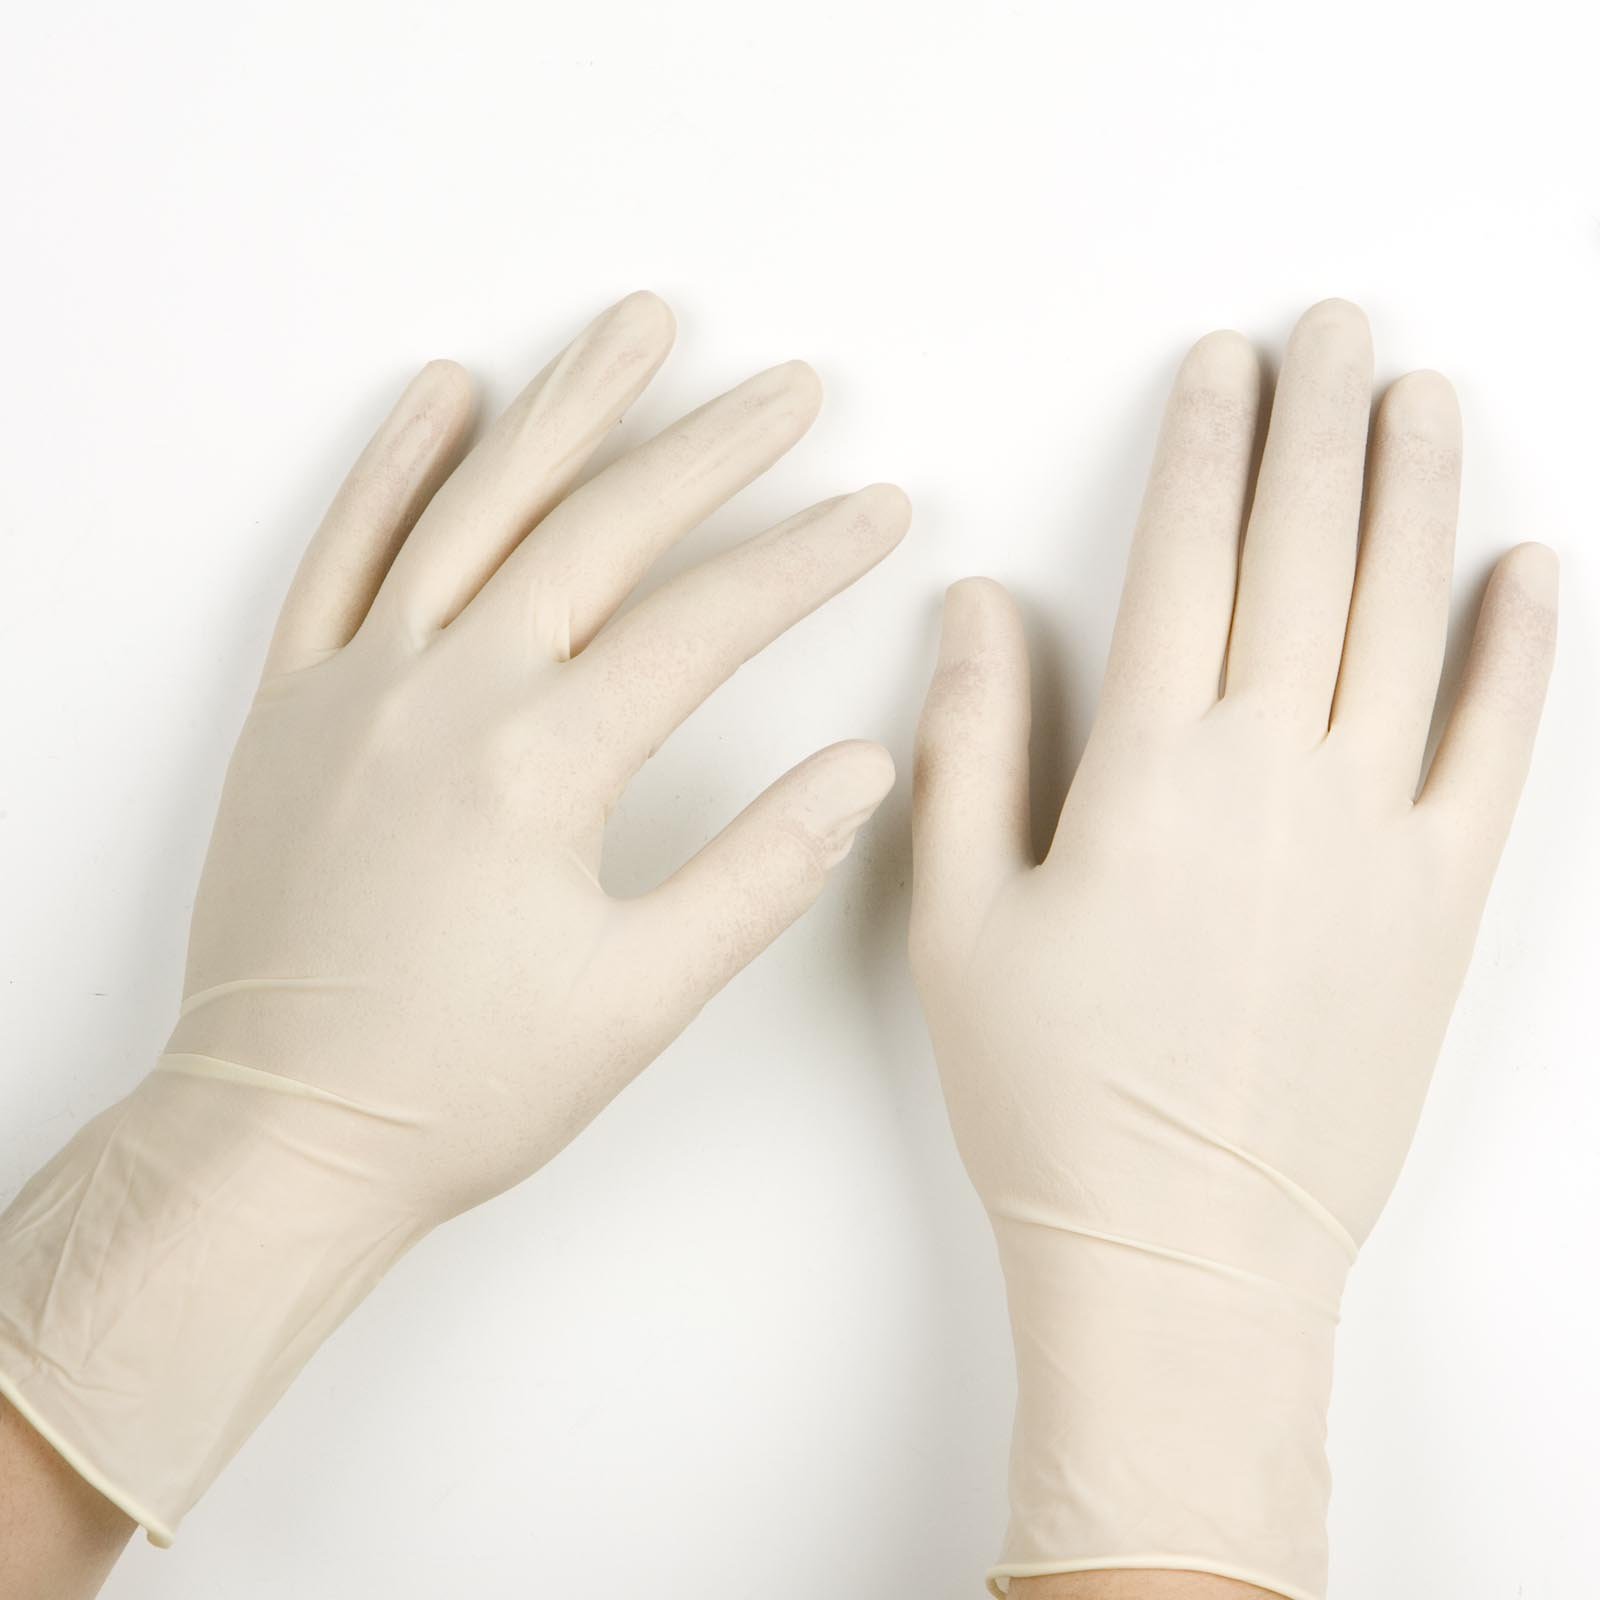 Priniva Sterile Latex Surgical Gloves, Size 678, Color off White